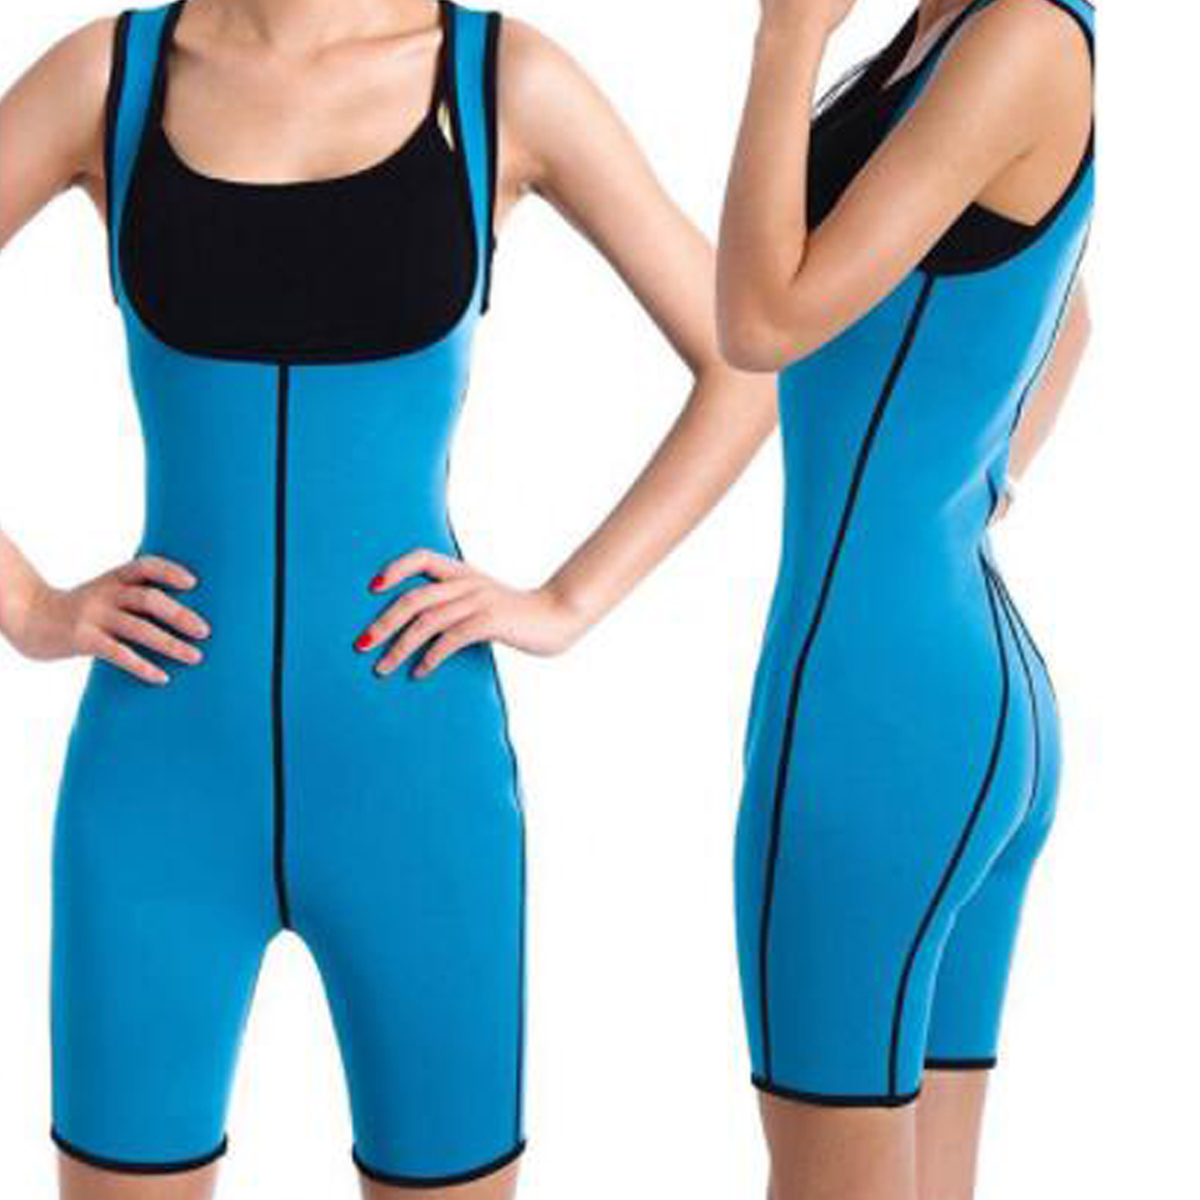 Womens-Shapewear-Full-Body-Sweat-Shaper-Fitness-Gym-Sport-Slimming-Keep-Fit-Sauna-Suit-Vest-1300071-1